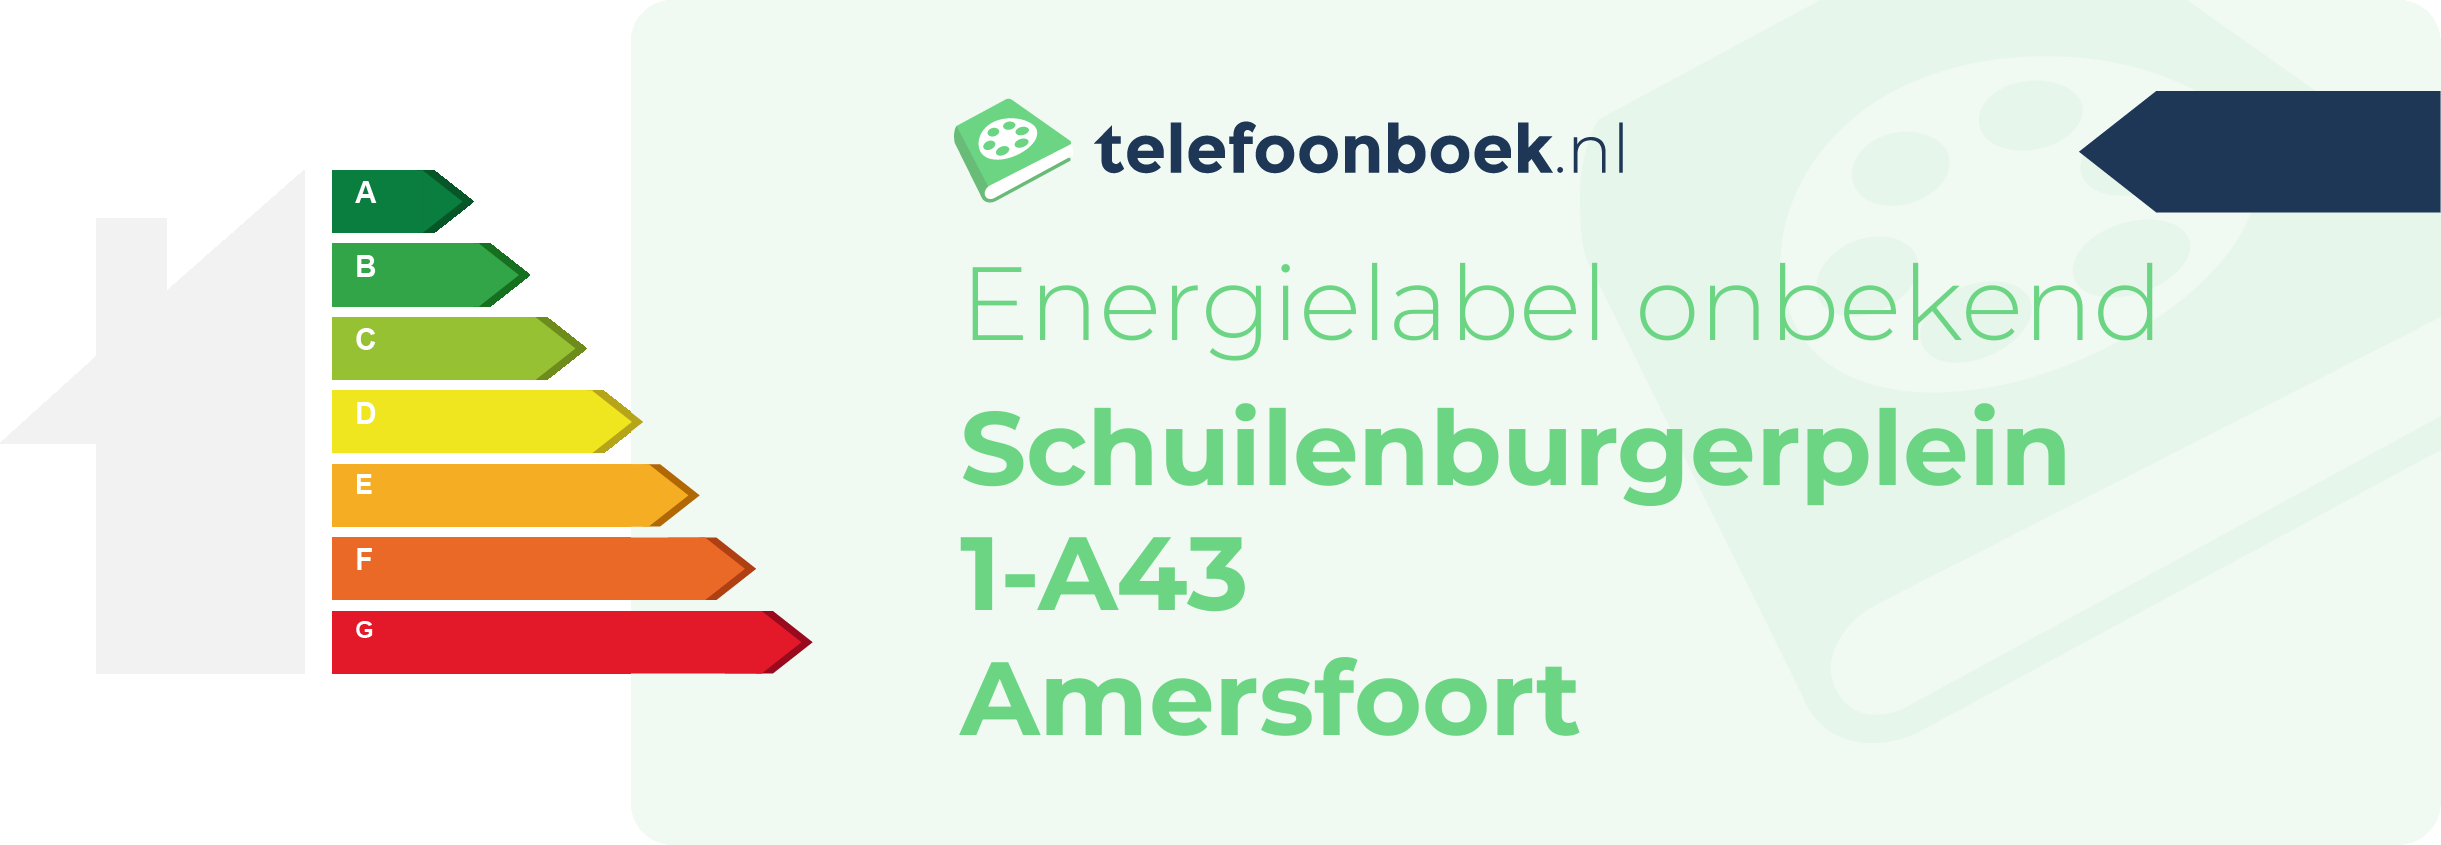 Energielabel Schuilenburgerplein 1-A43 Amersfoort